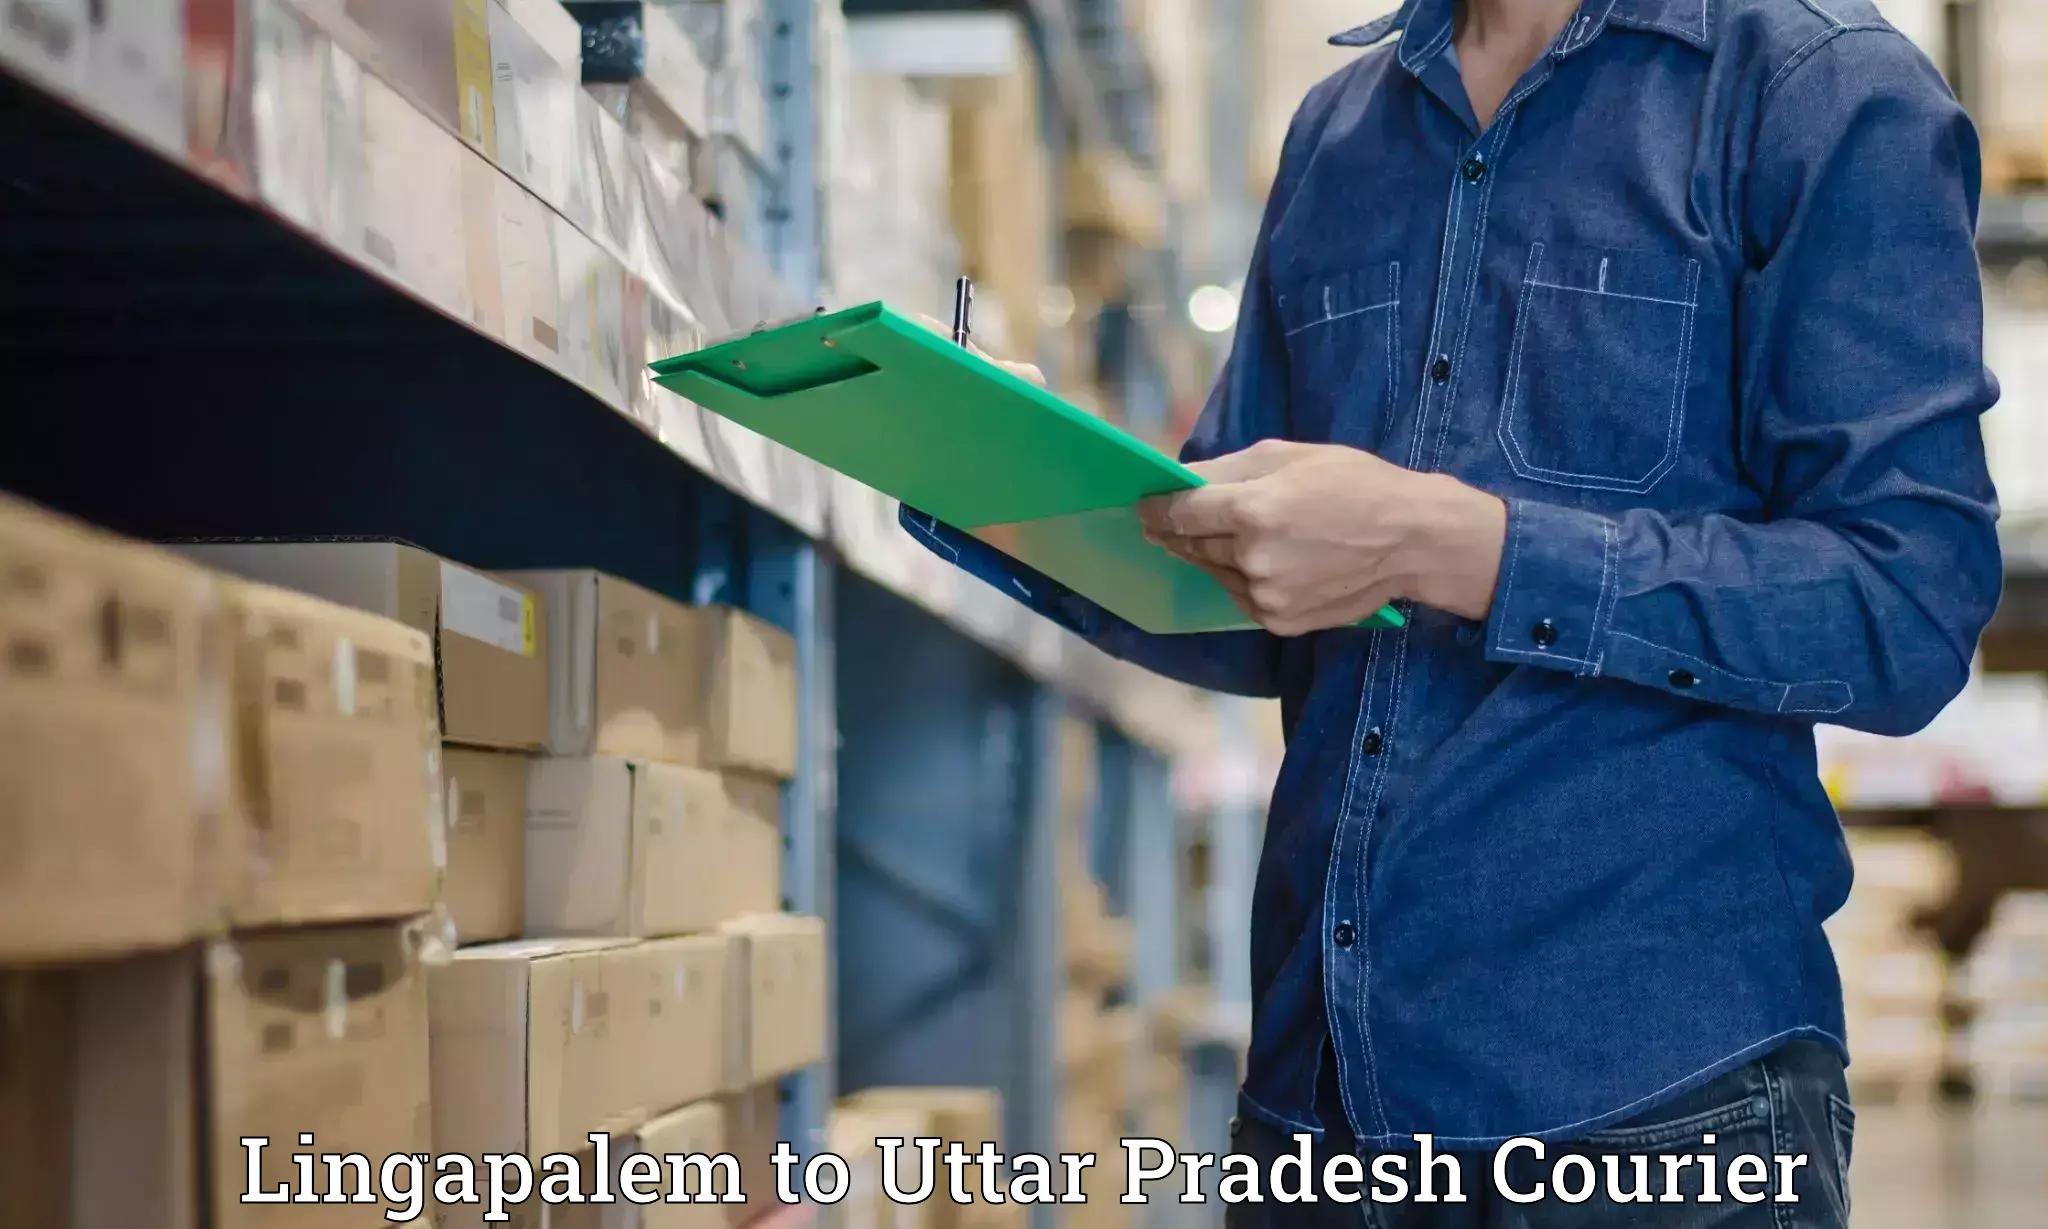 Quick dispatch service Lingapalem to Aligarh Muslim University